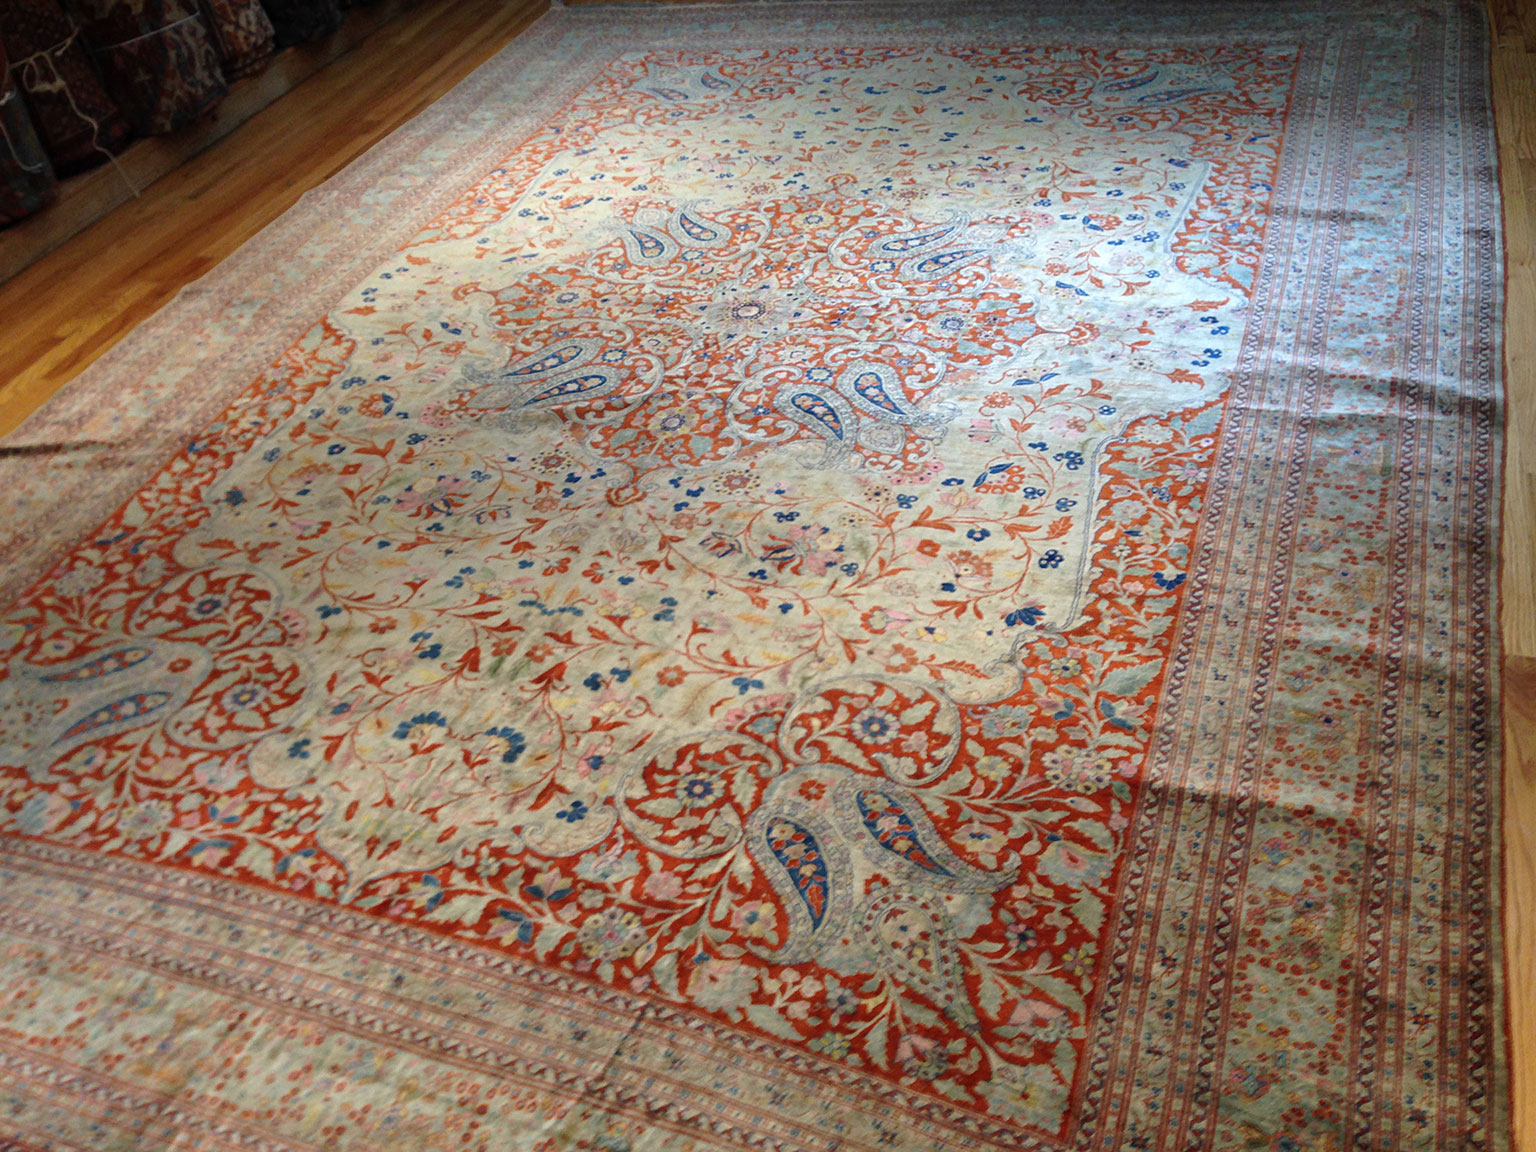 Antique tabriz Carpet - # 50896